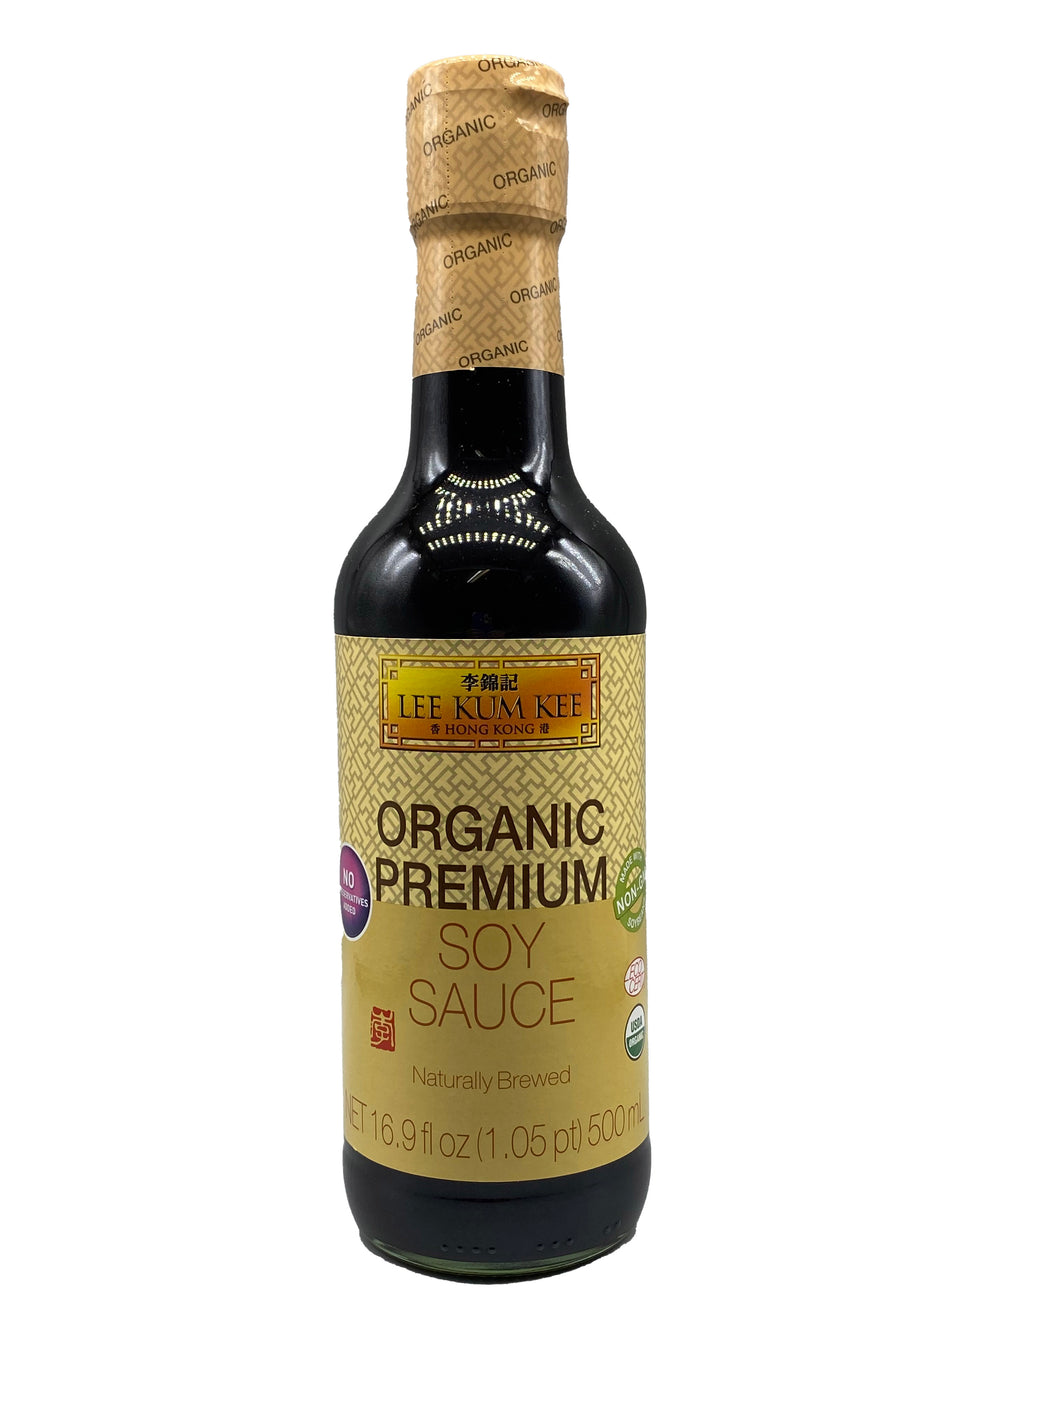 Lee Kum Kee Organic Premium Soy Sauce